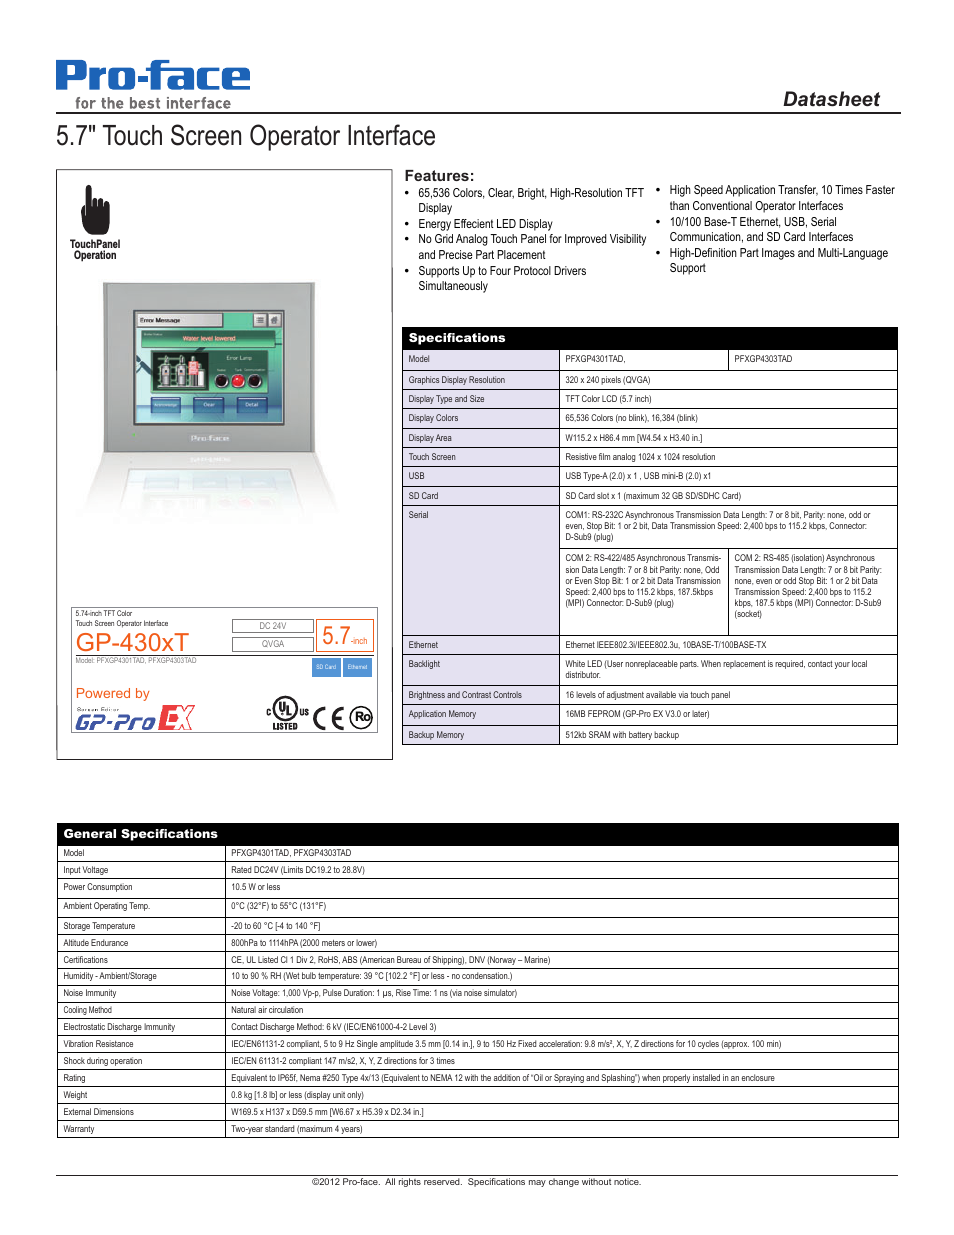 GP4500 - 10.4 Standard HMIs"